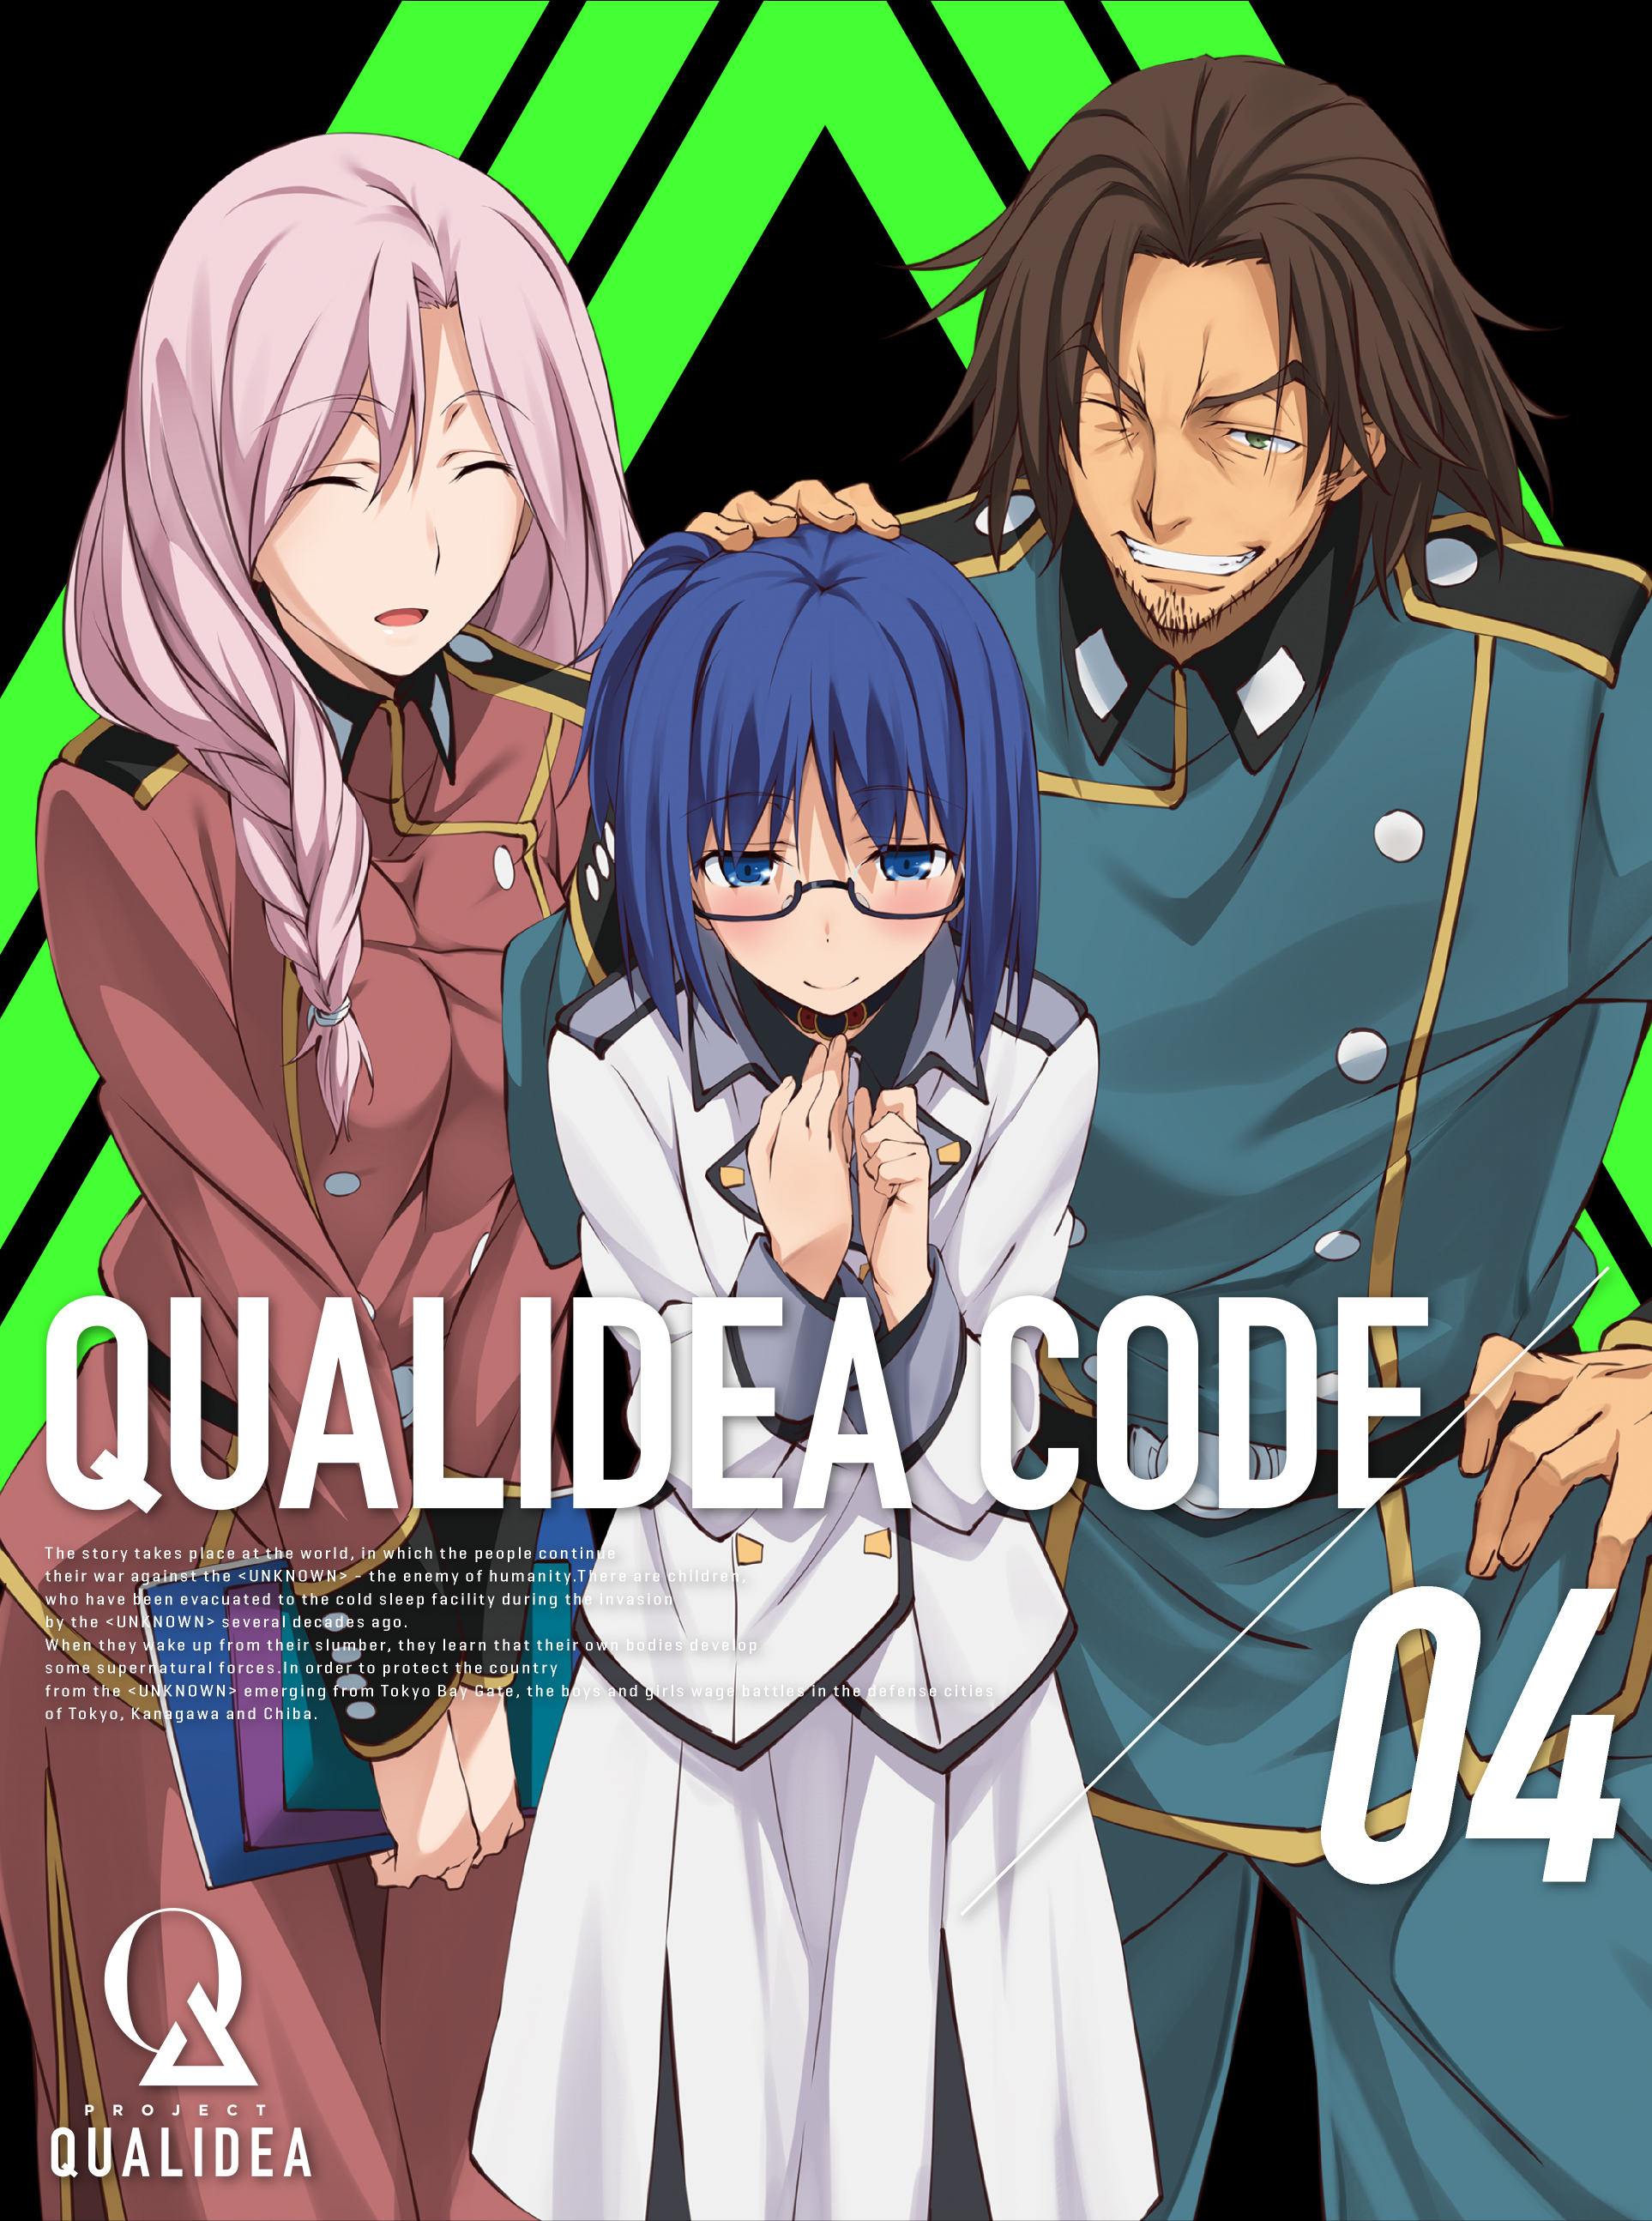 Qualidea Code (Anime), Project Qualidea Wiki